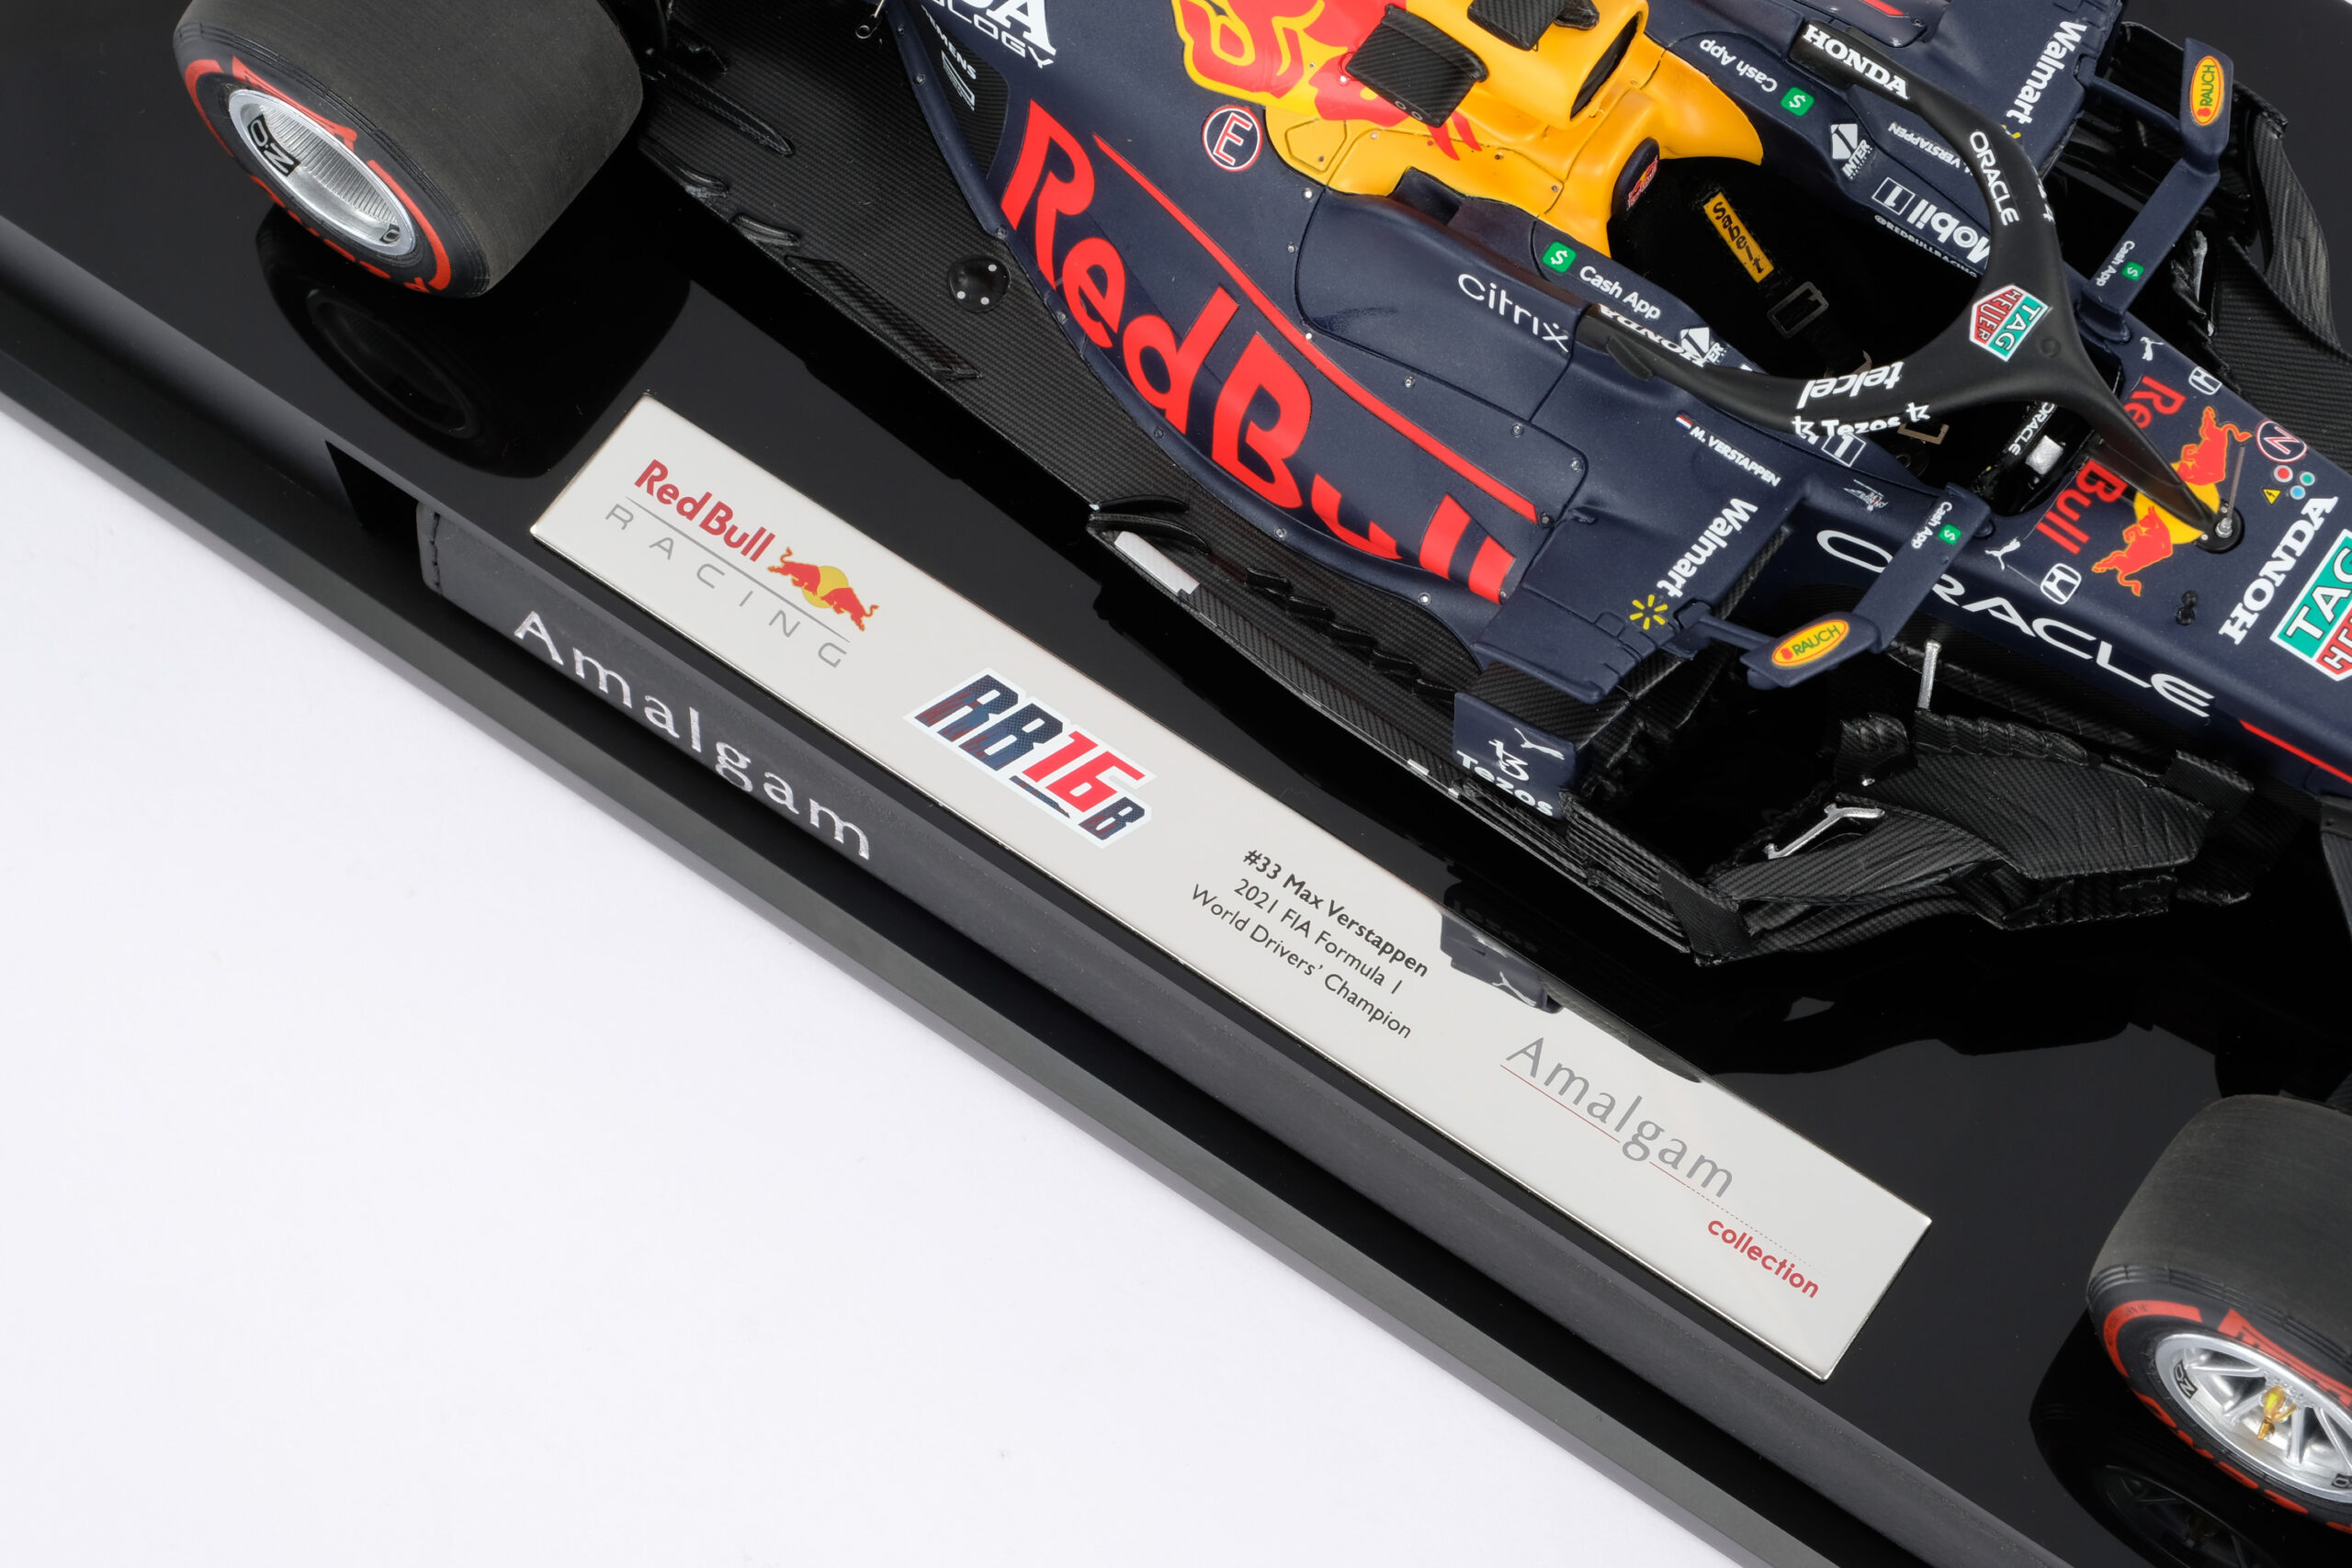 Red Bull Honda RB16B 33 F1 Winner Grand Prix de Monaco 2021 Max